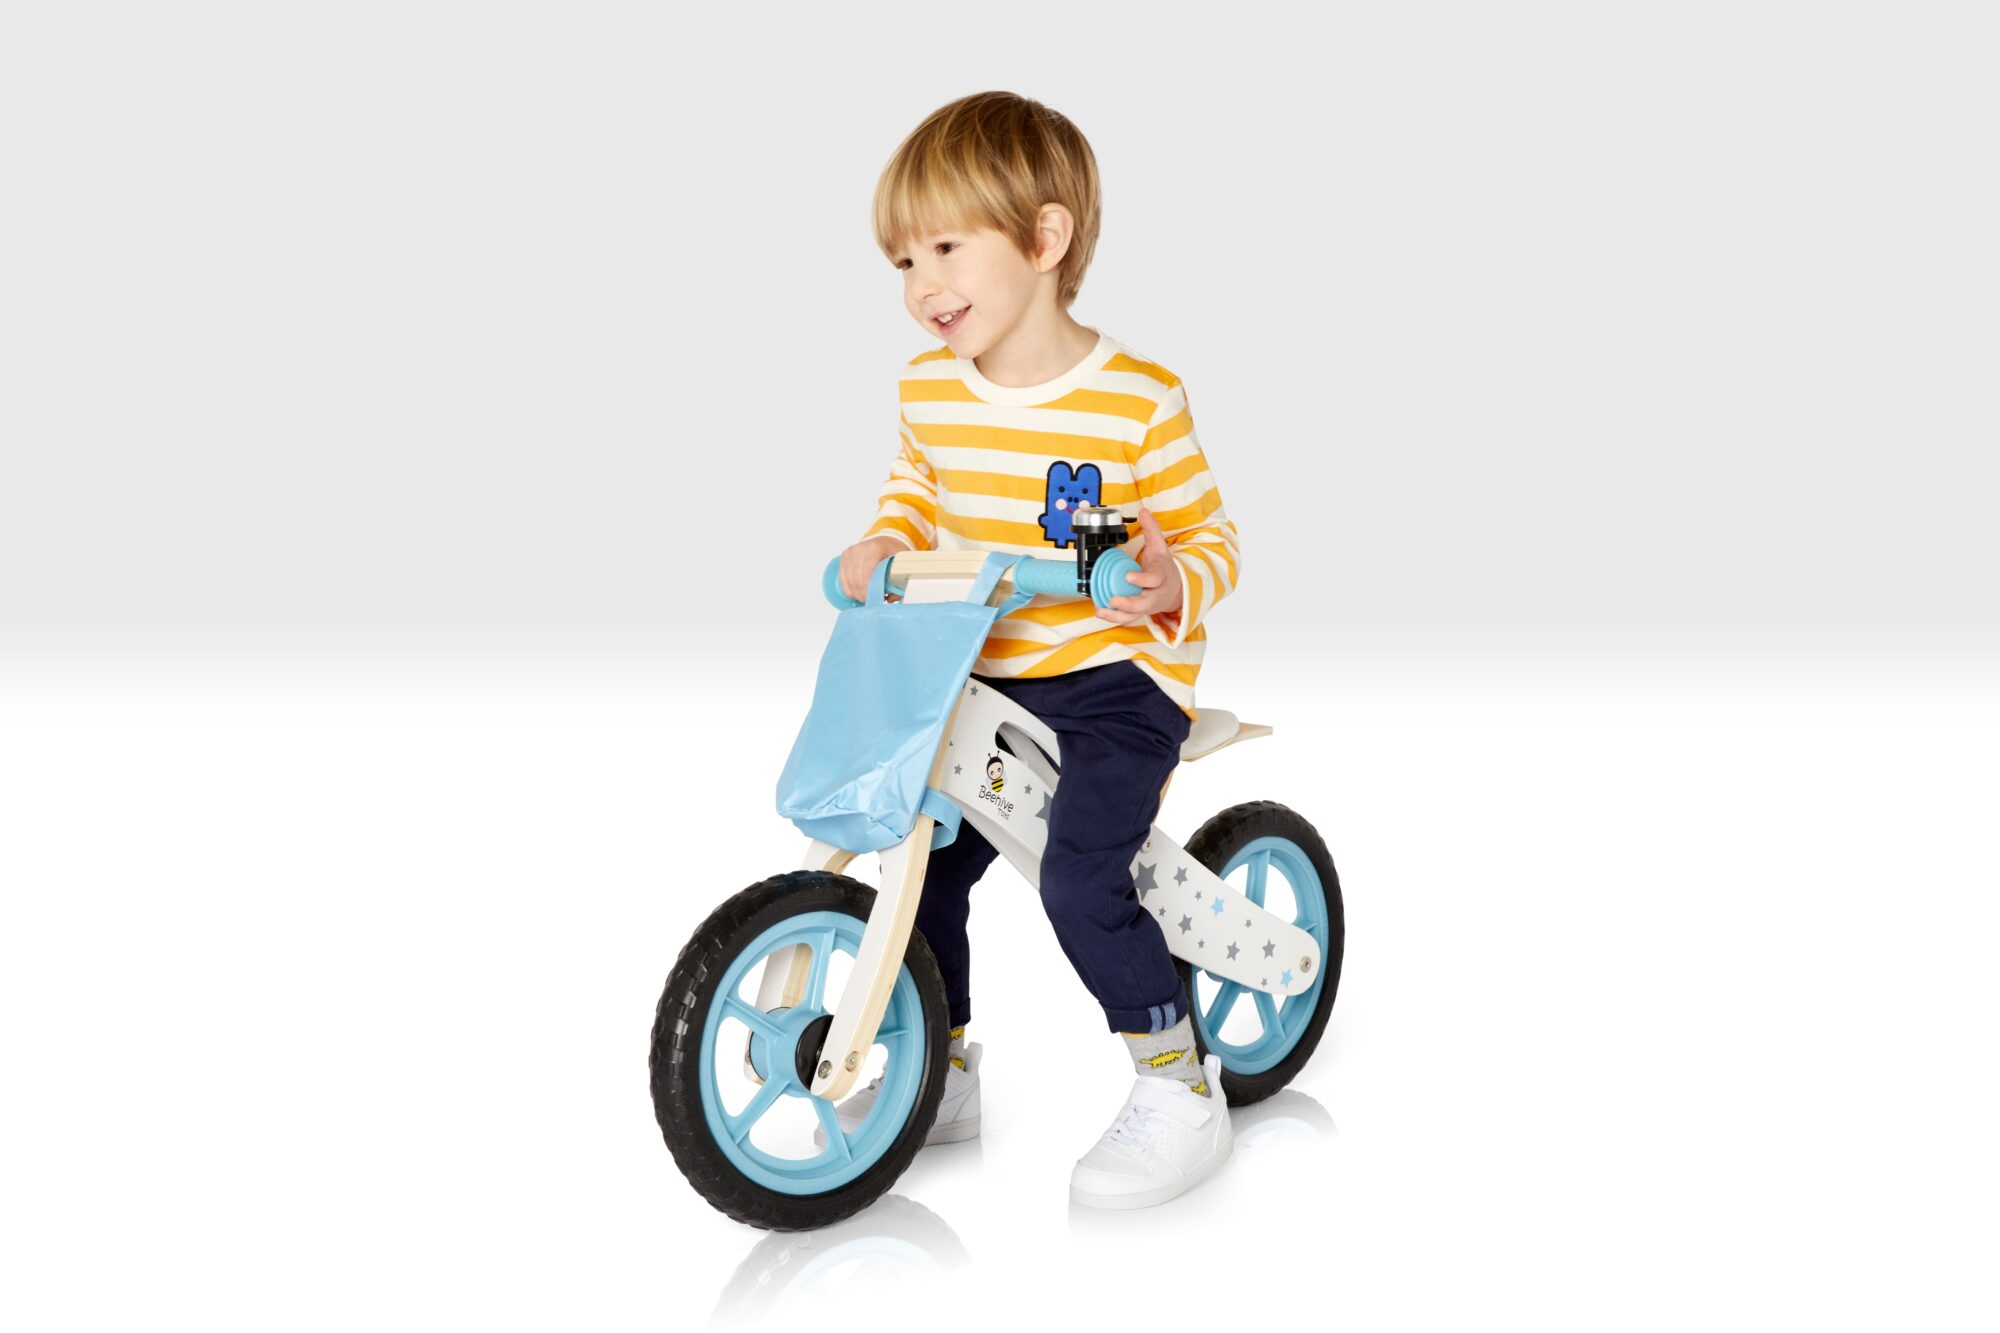 Blue Balance Bike with boy